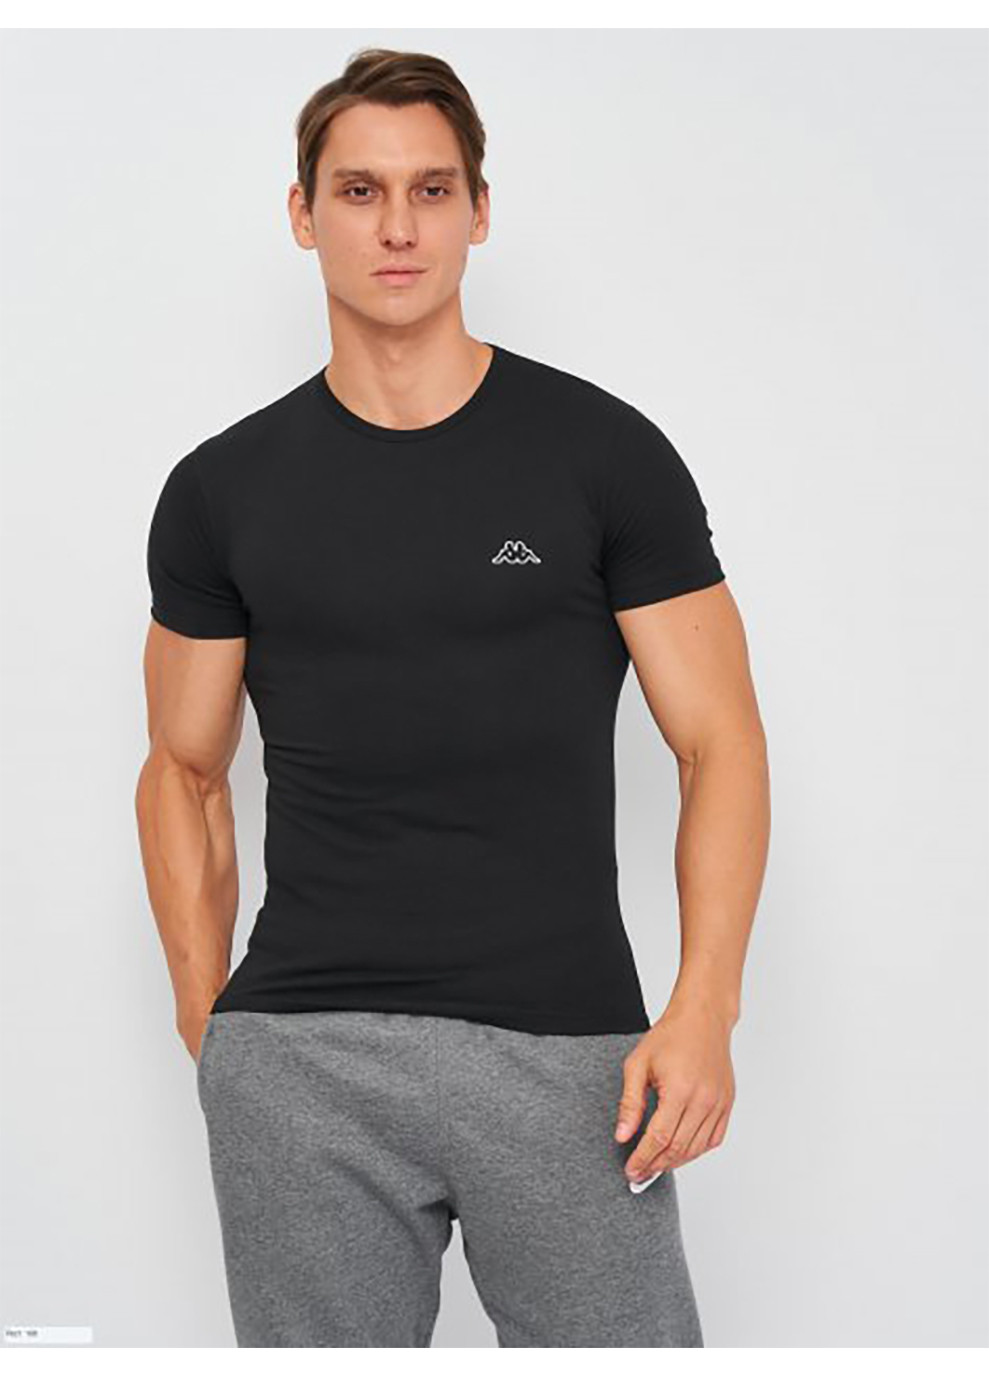 Черная футболка t-shirt mezza manica girocollo черный муж 2xl k1304 nero 2xl Kappa